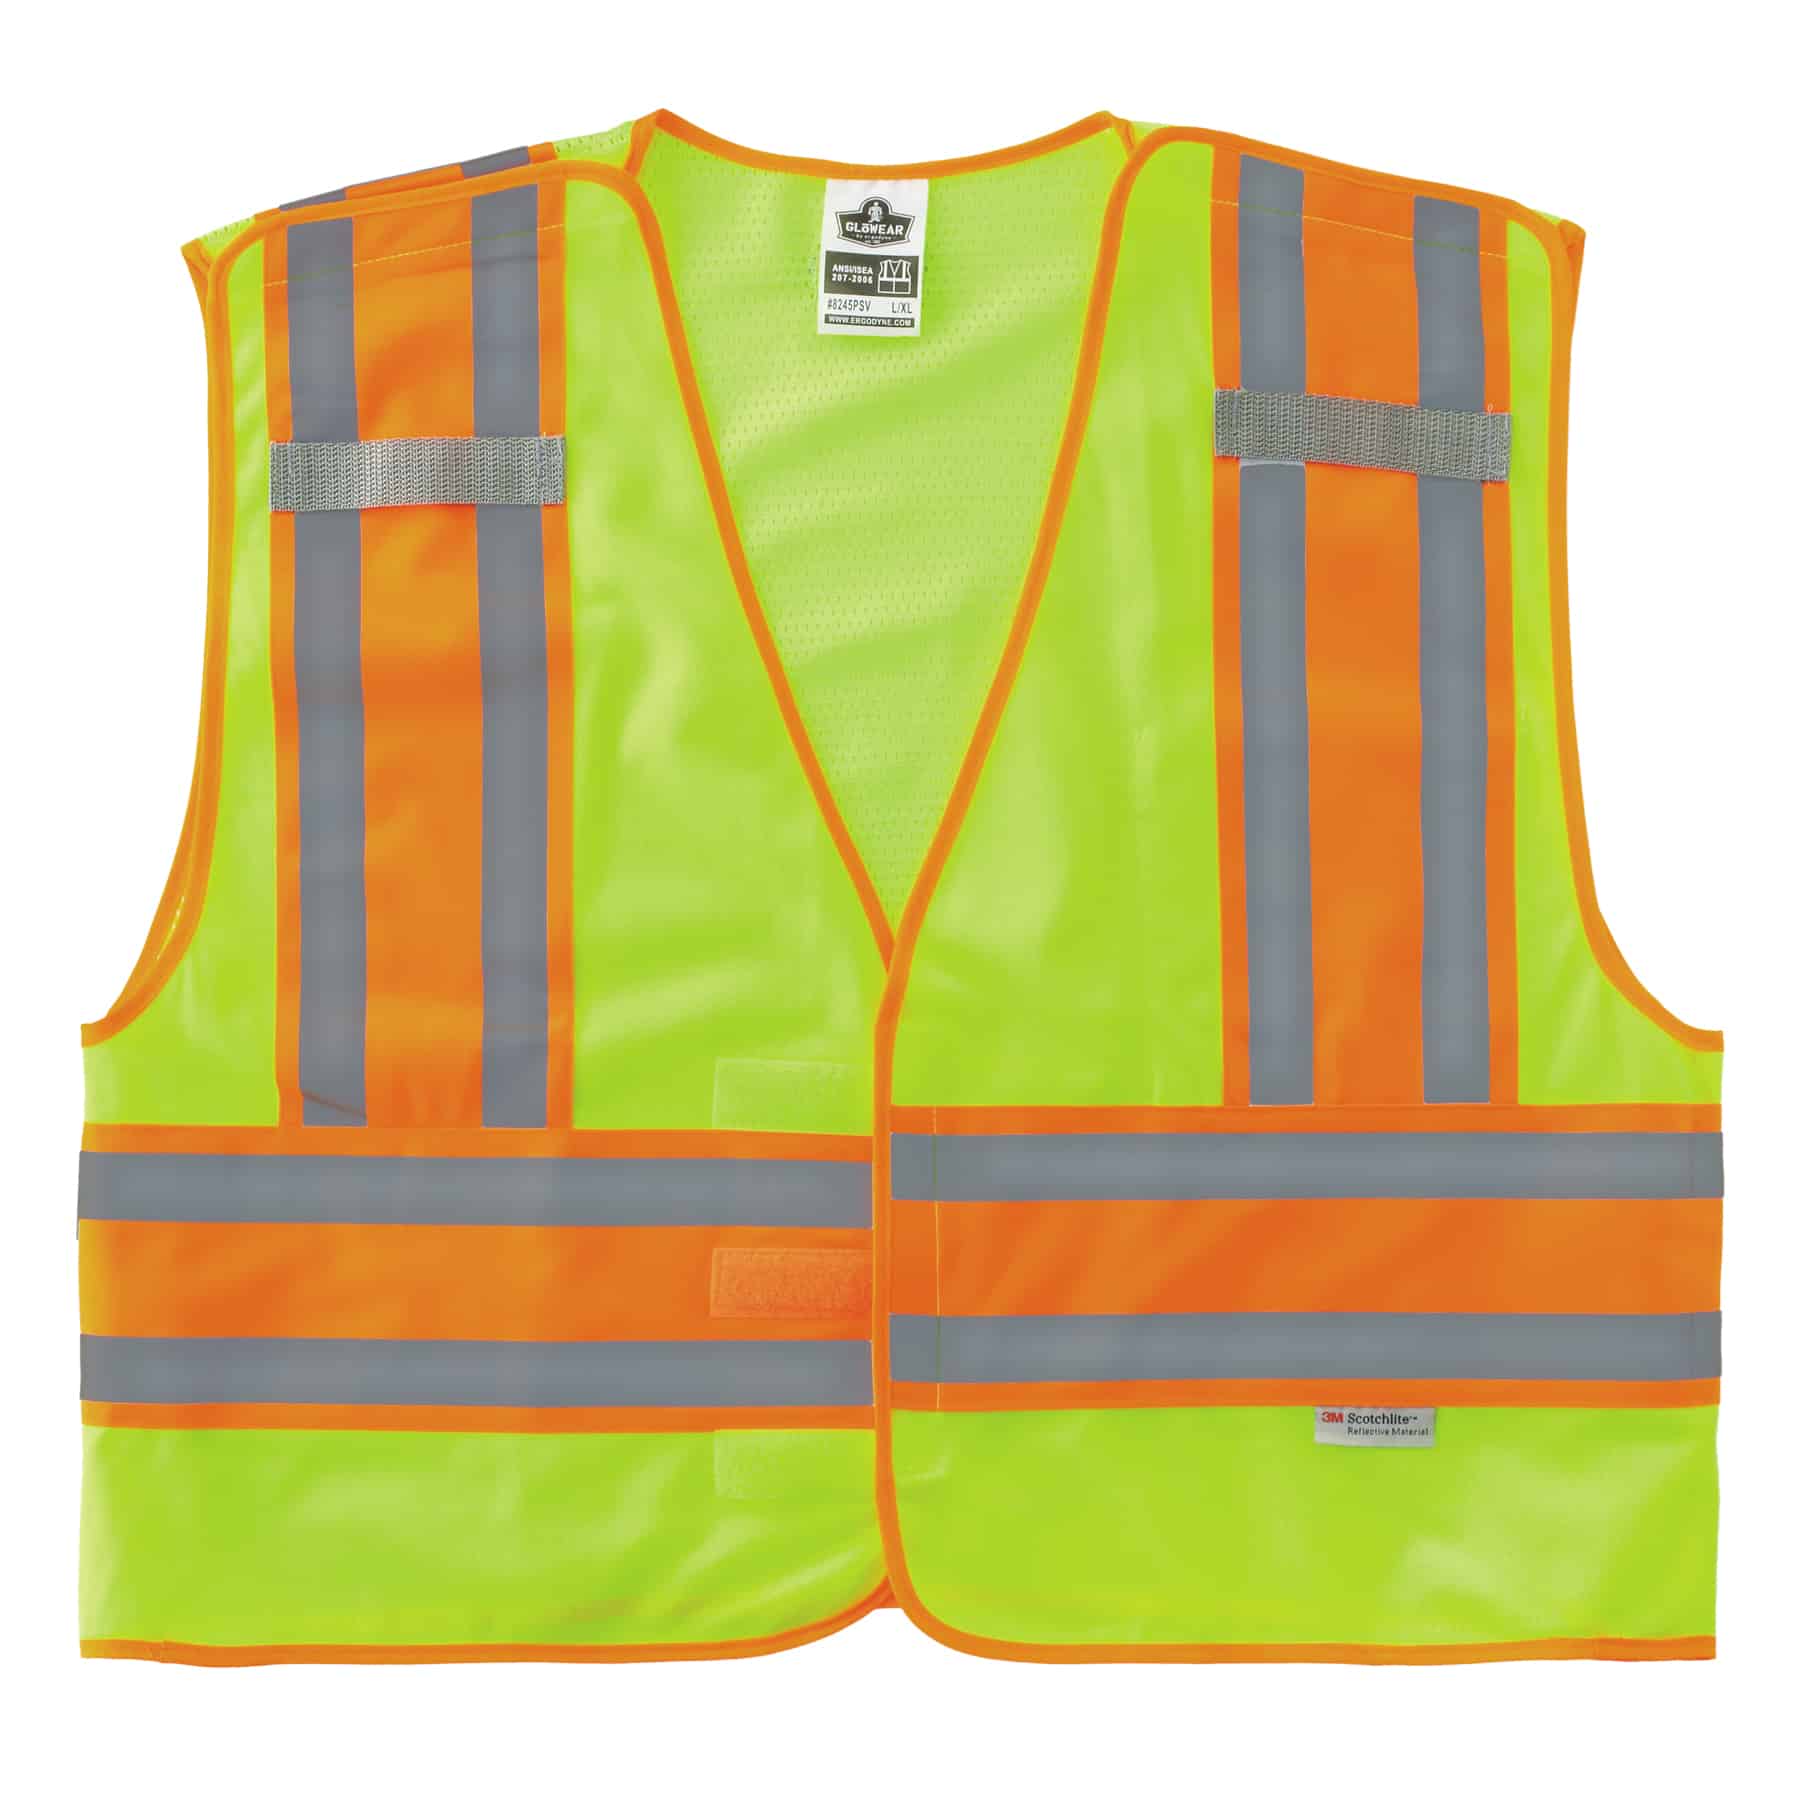 https://www.ergodyne.com/sites/default/files/product-images/23393-8245psv-type-p-class-2-public-safety-vest-lime-front.jpg